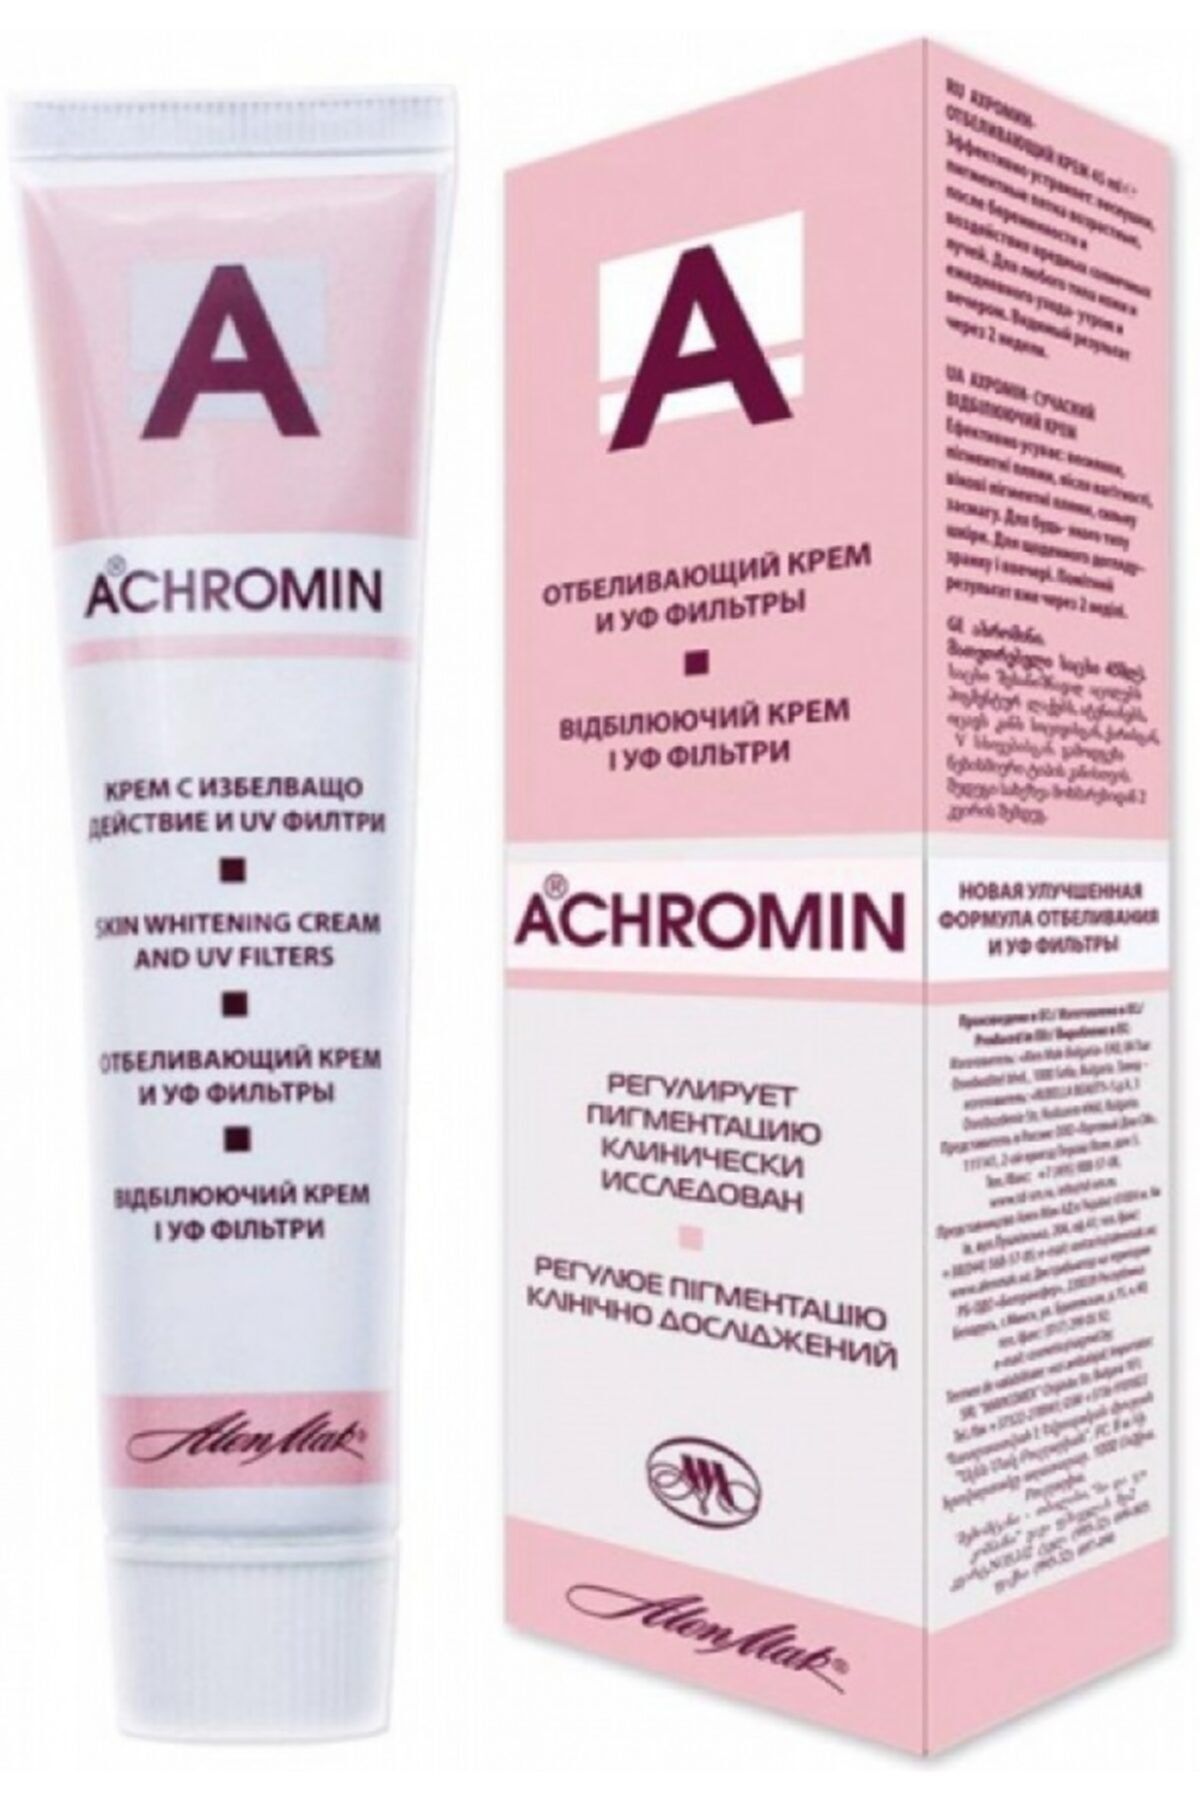 Ахромин от пятен. Ахромин для лица отбеливающий с УФ фильтрами 45 мл. Крем "achromin" отбеливающий 45 мл. Ахромин крем для лица отбеливающий UV-защита 45мл. Ахромин крем отбеливающий для лица с УФ защитой 45.